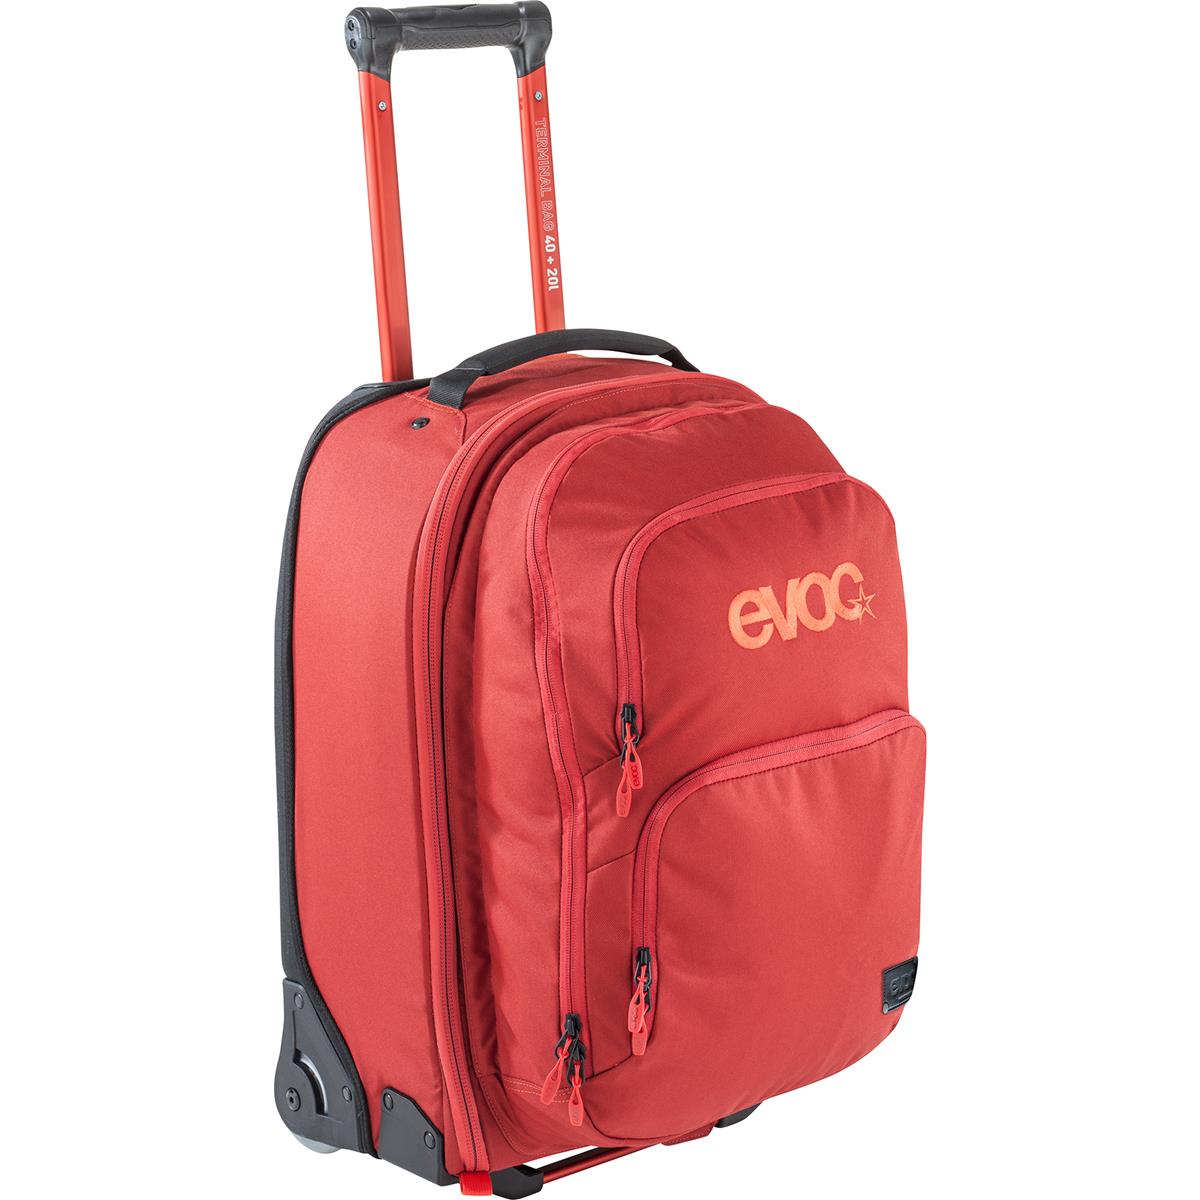 Evoc Goggle Terminal Bag Chili Red, 40 L incl. 20 L Daypack